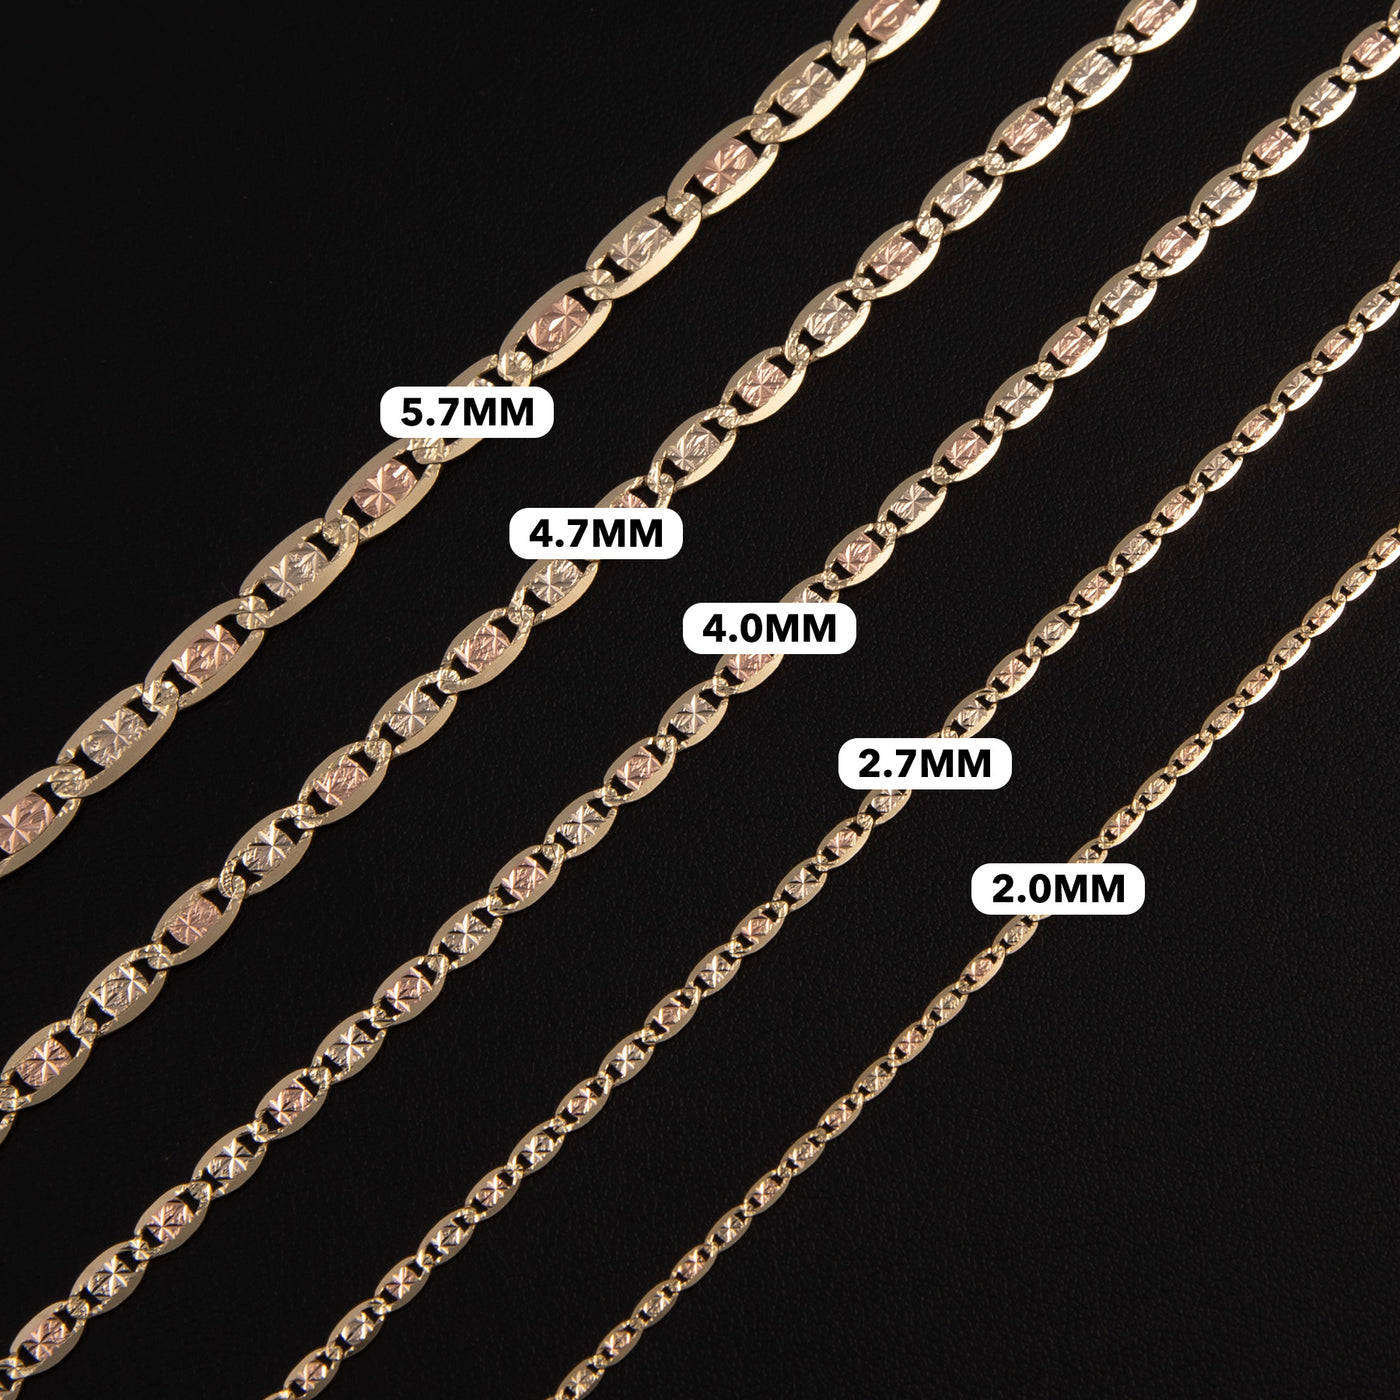 Valentino Link Chain Necklace 14K Tri-Color Gold